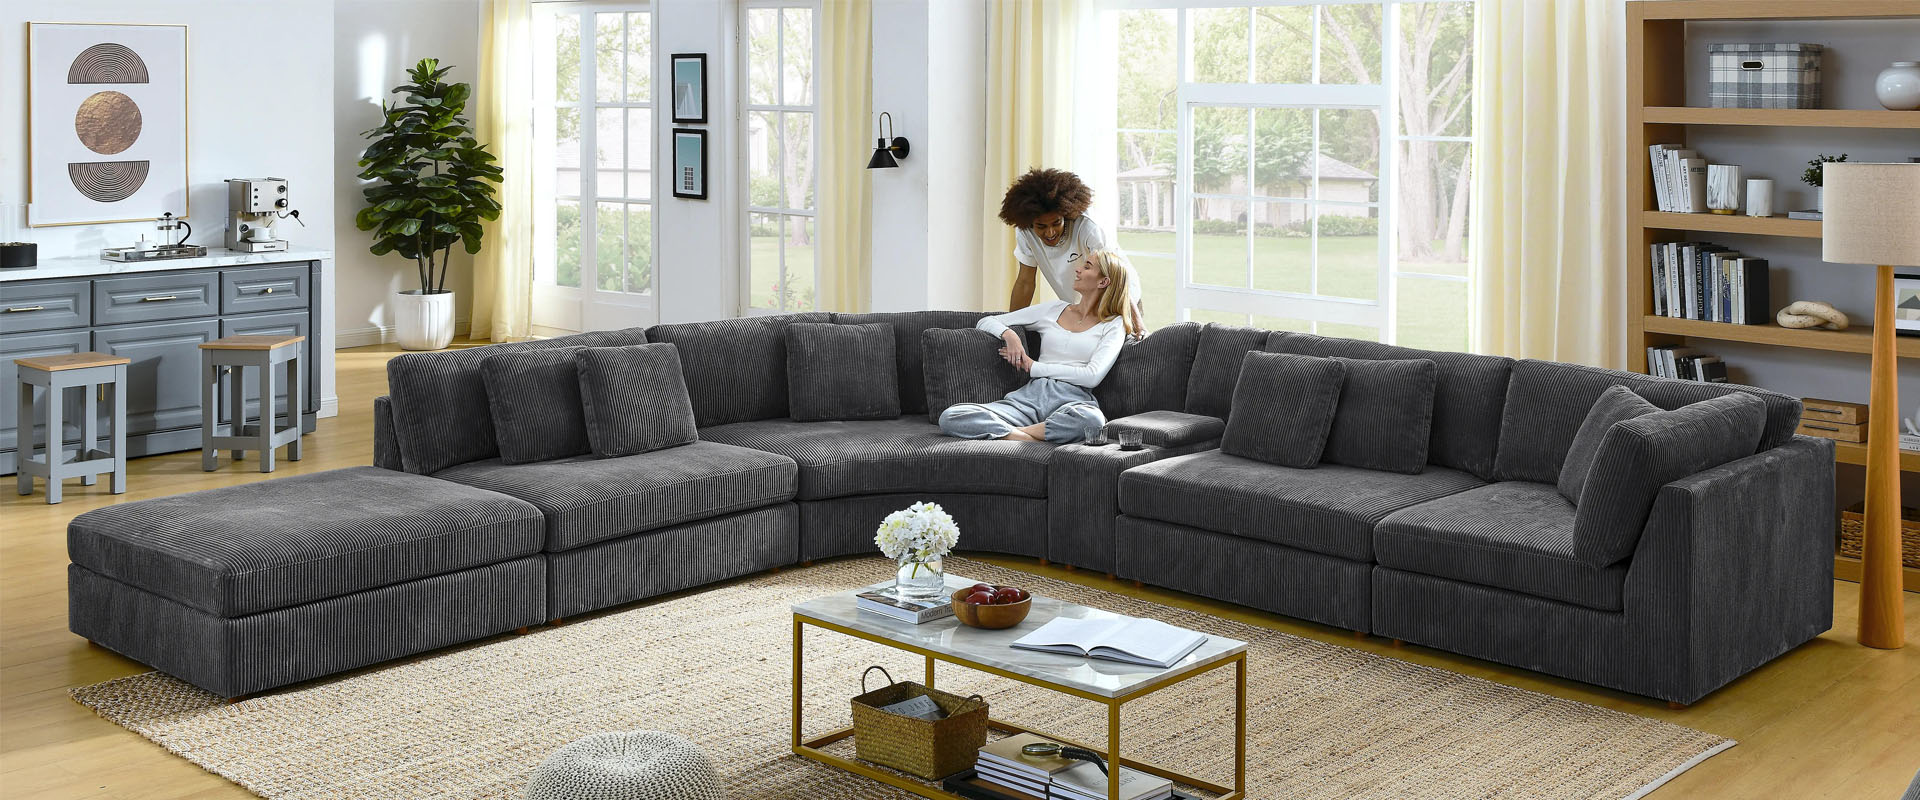 Covercrafter - Modular Sectional Sofa, Modular Couch Sofa